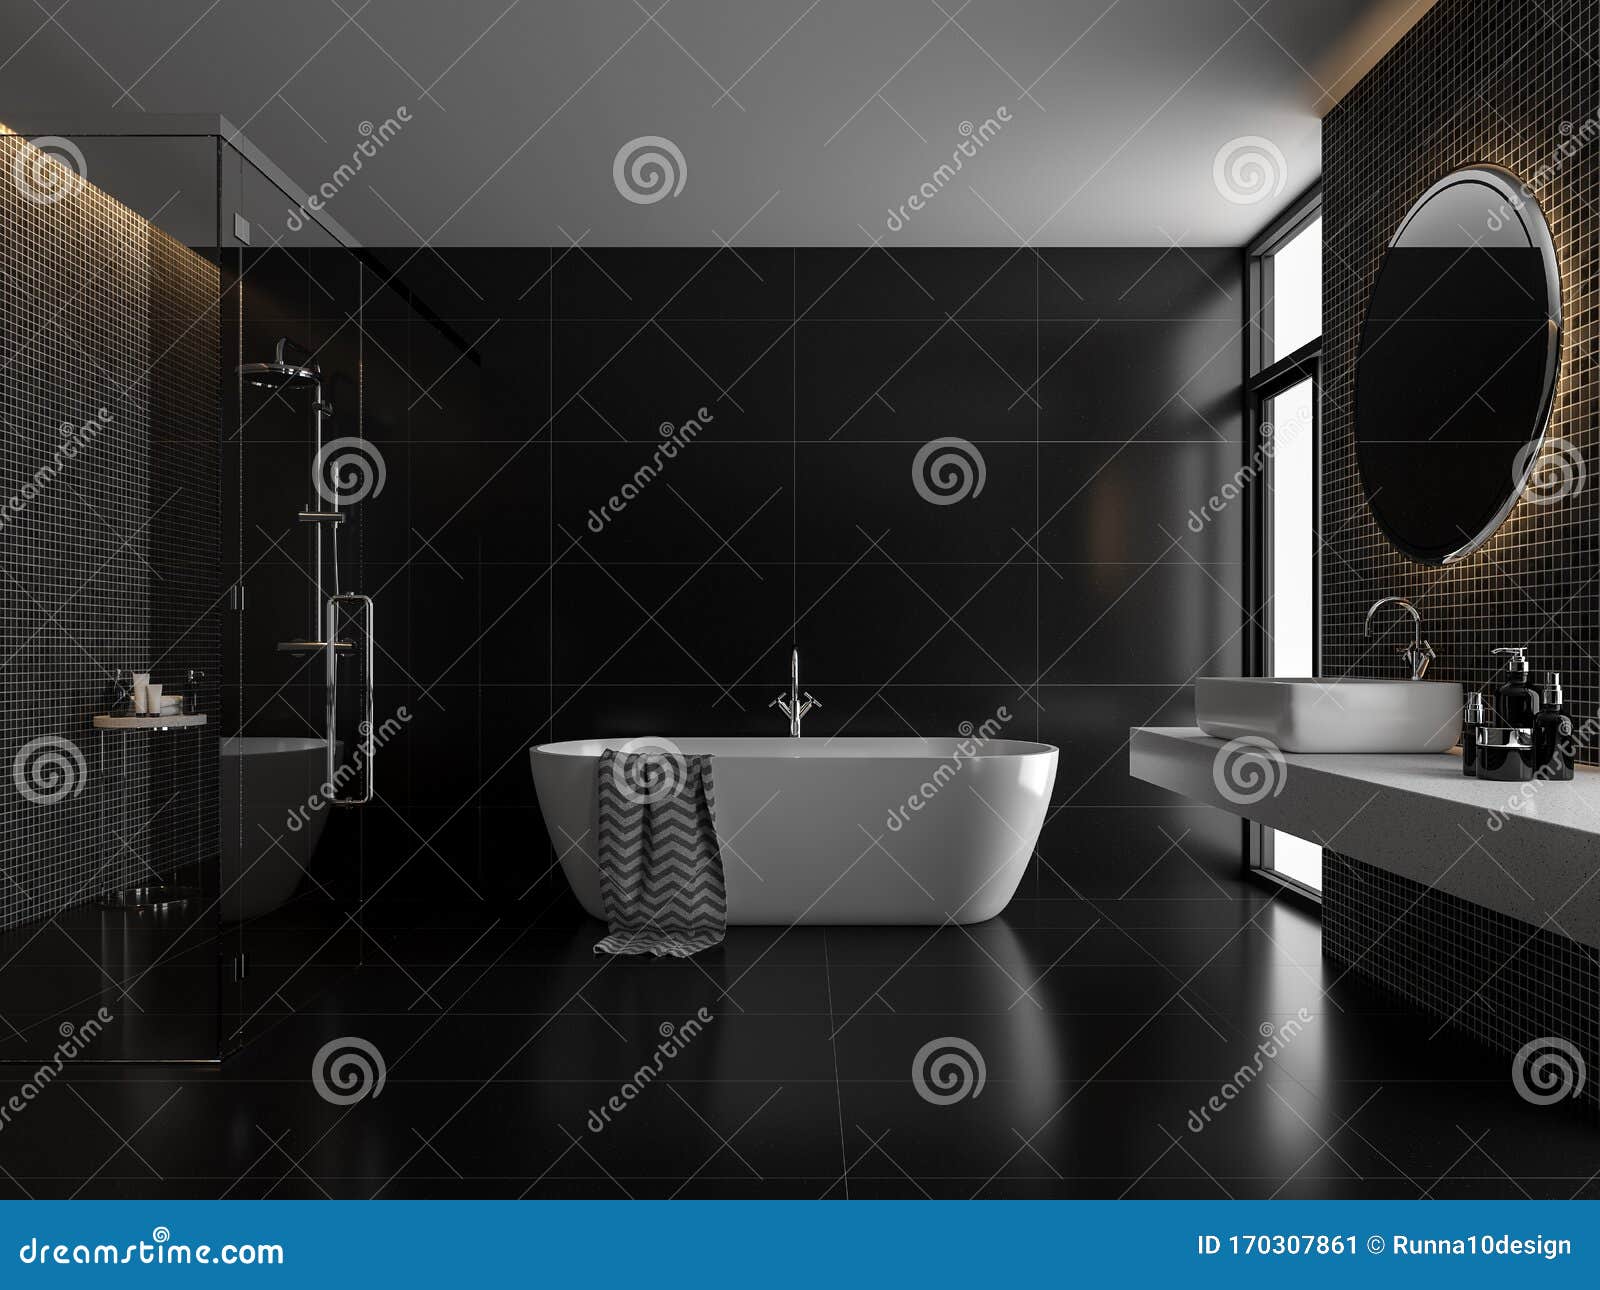 Modern Luxury Black Tile Wall Bathroom 3d Render Stock Illustration ...